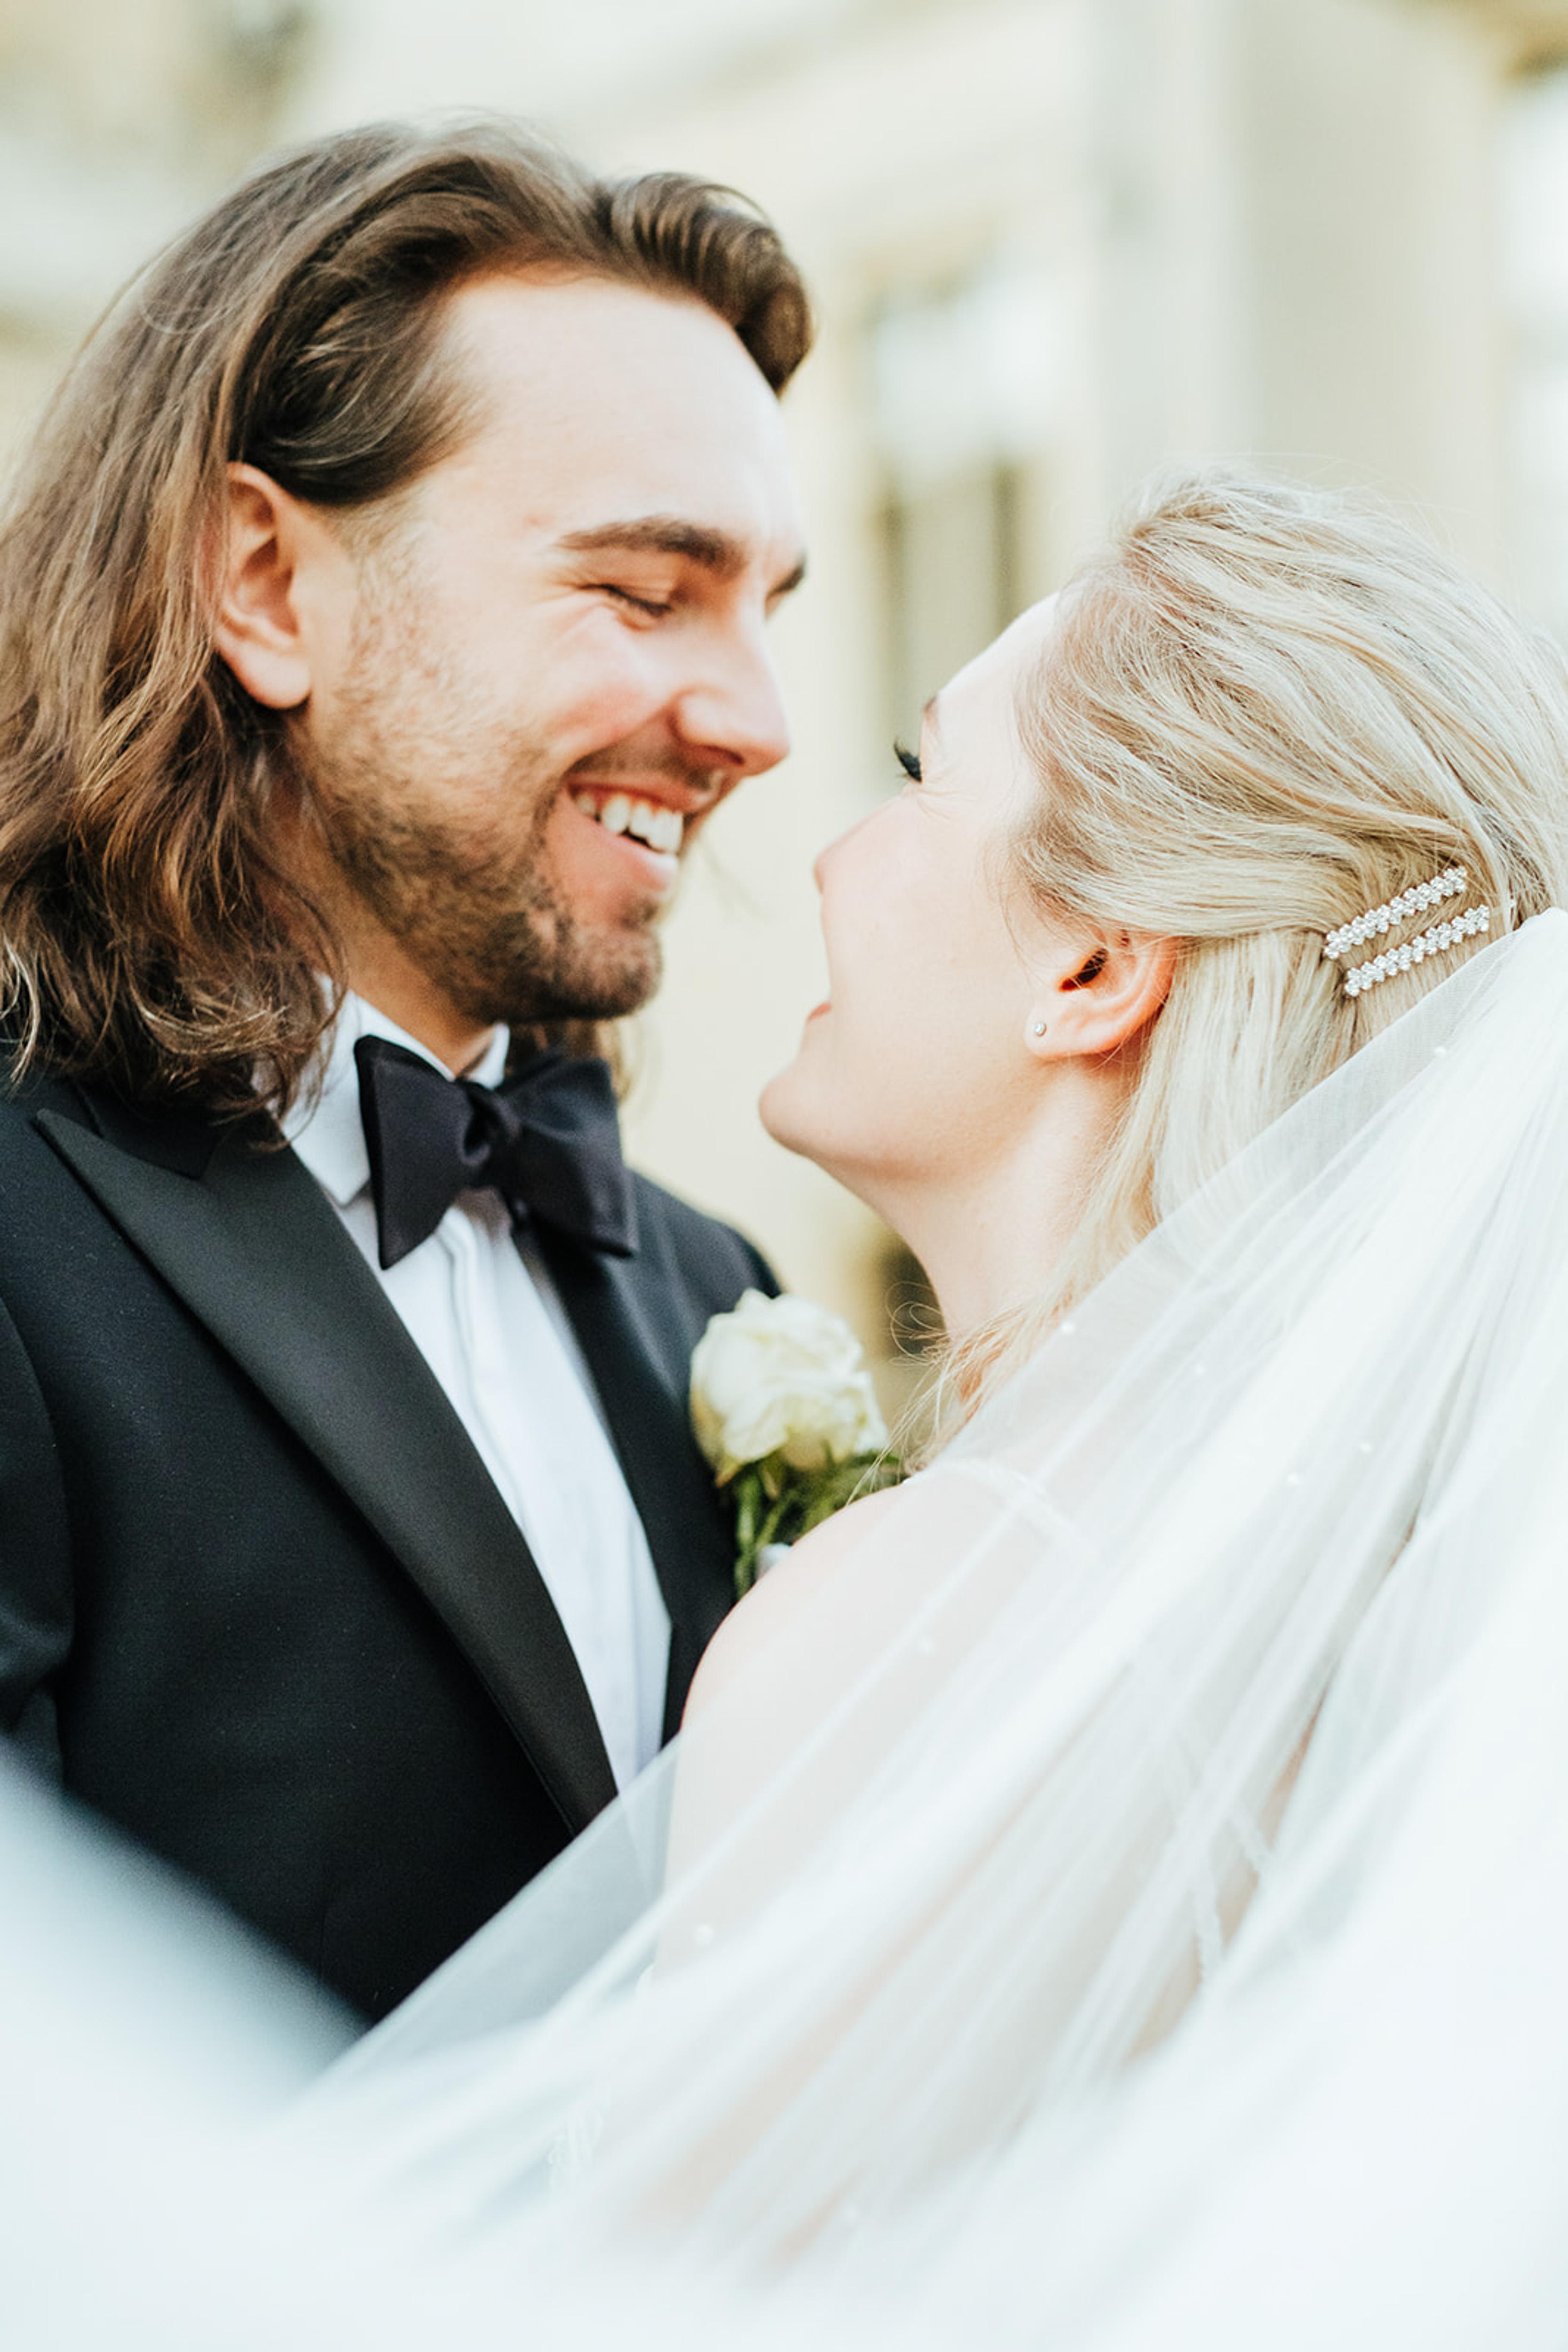 Romantic Bride and Groom Wedding Portraits, Golden Hour. Editorial Wedding Photography. Aimee Joy Photography.